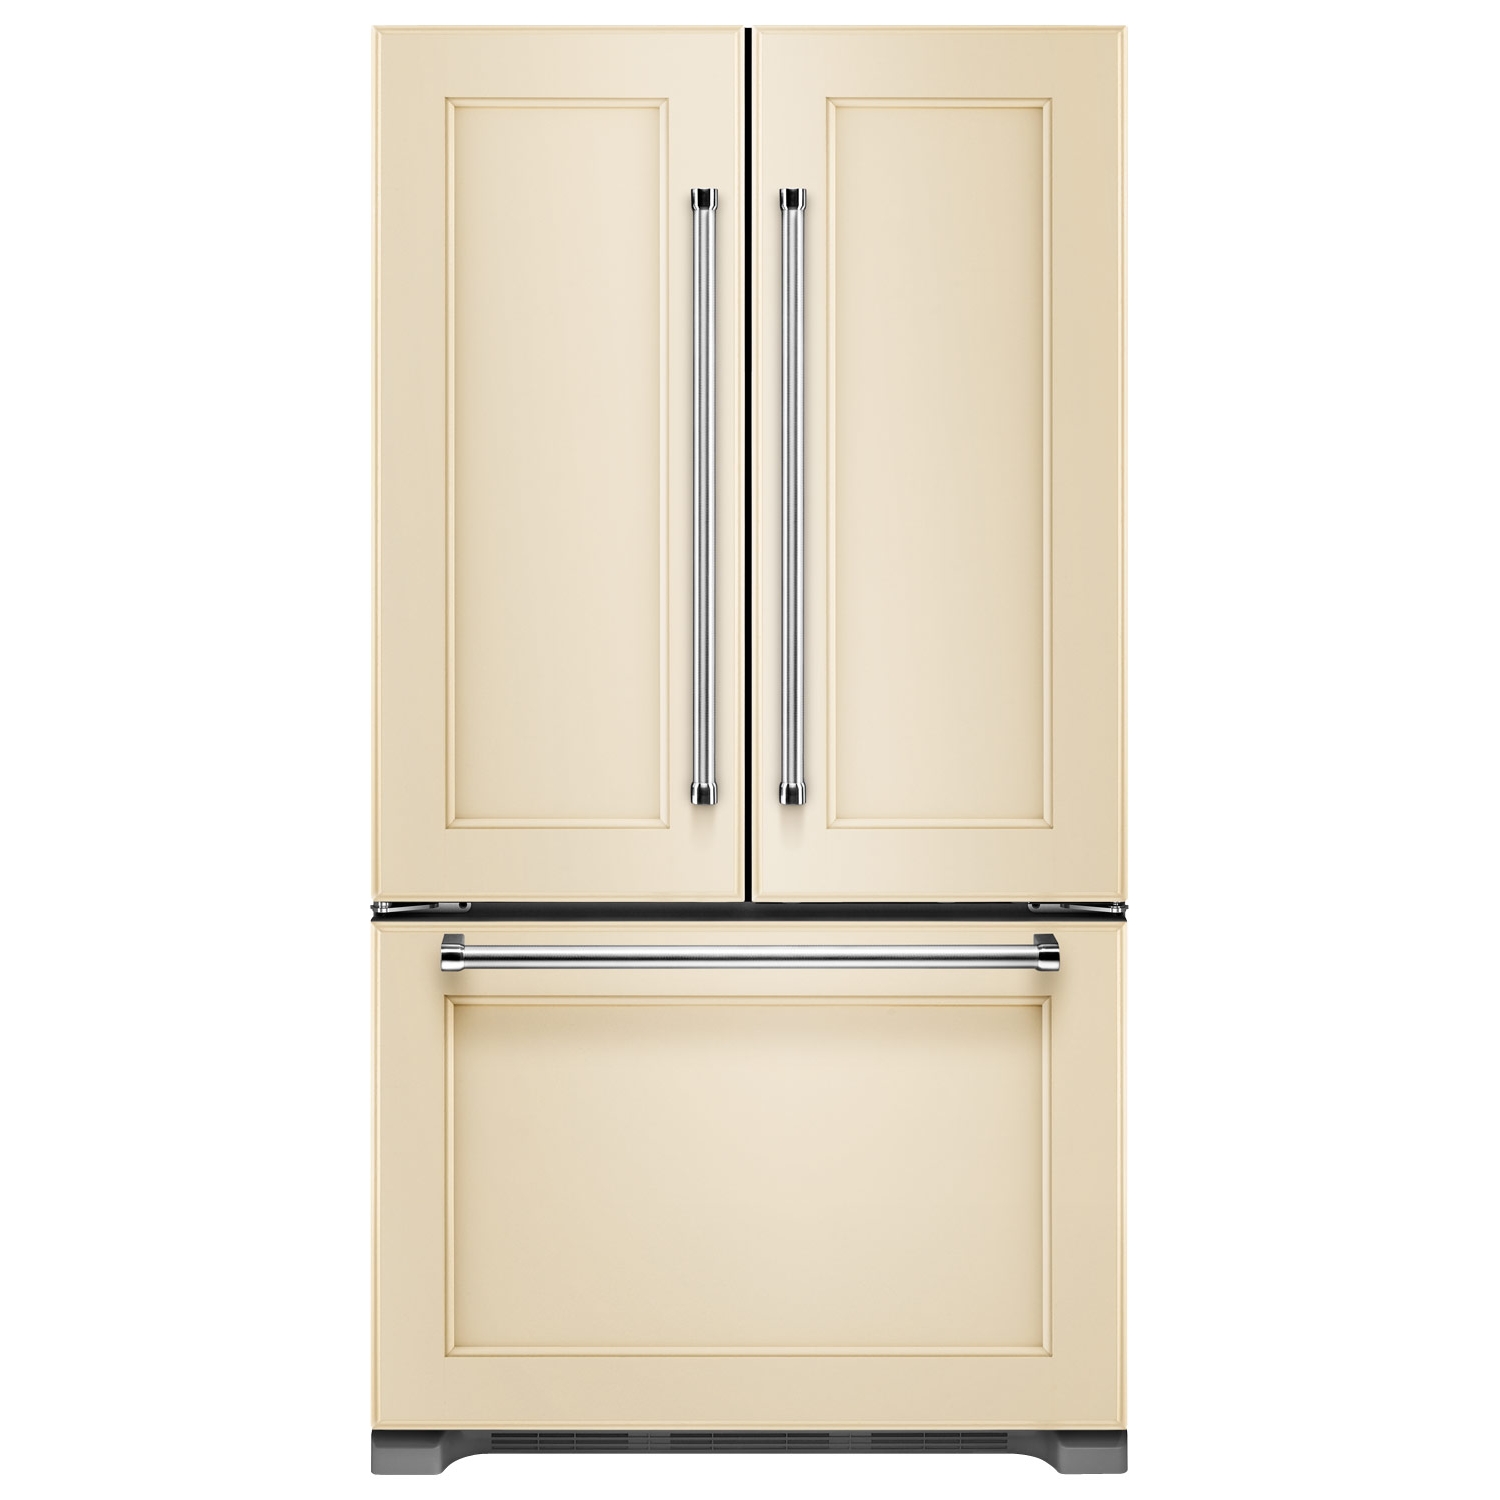 KitchenAid Refrigerator Model KRFC302EPA